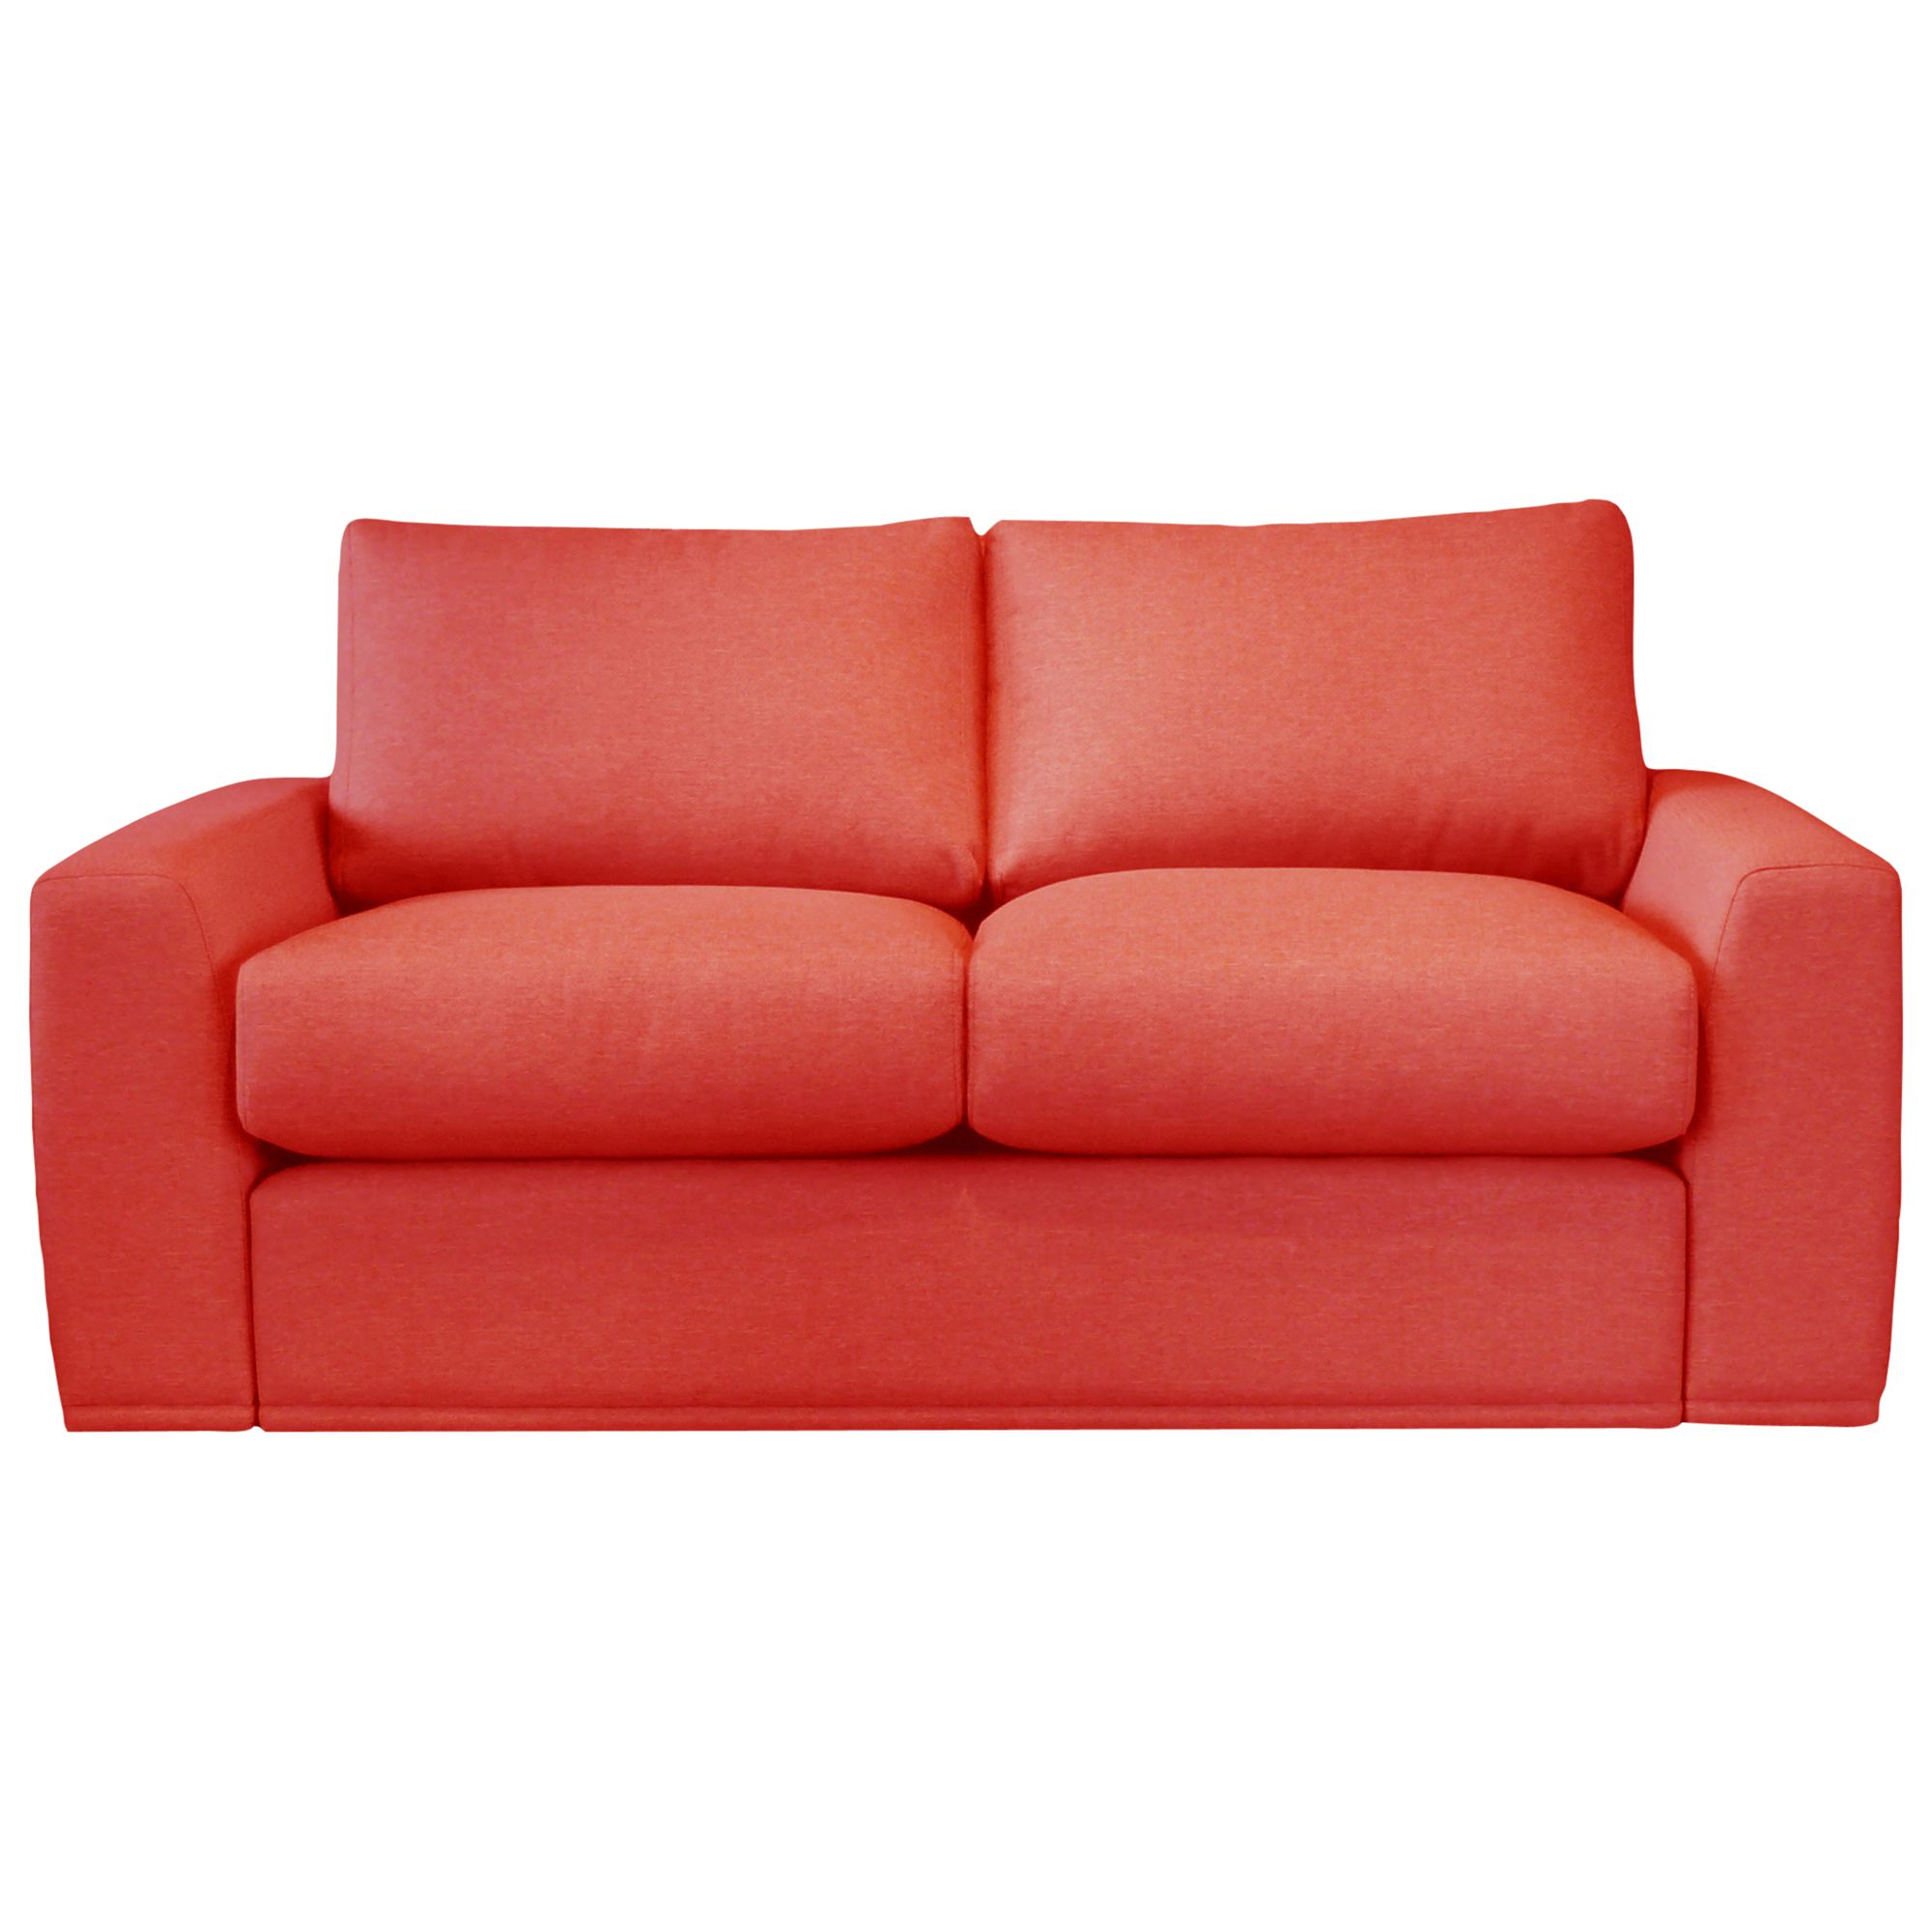 House by John Lewis Finlay Medium Sofa, Red, width 176cm